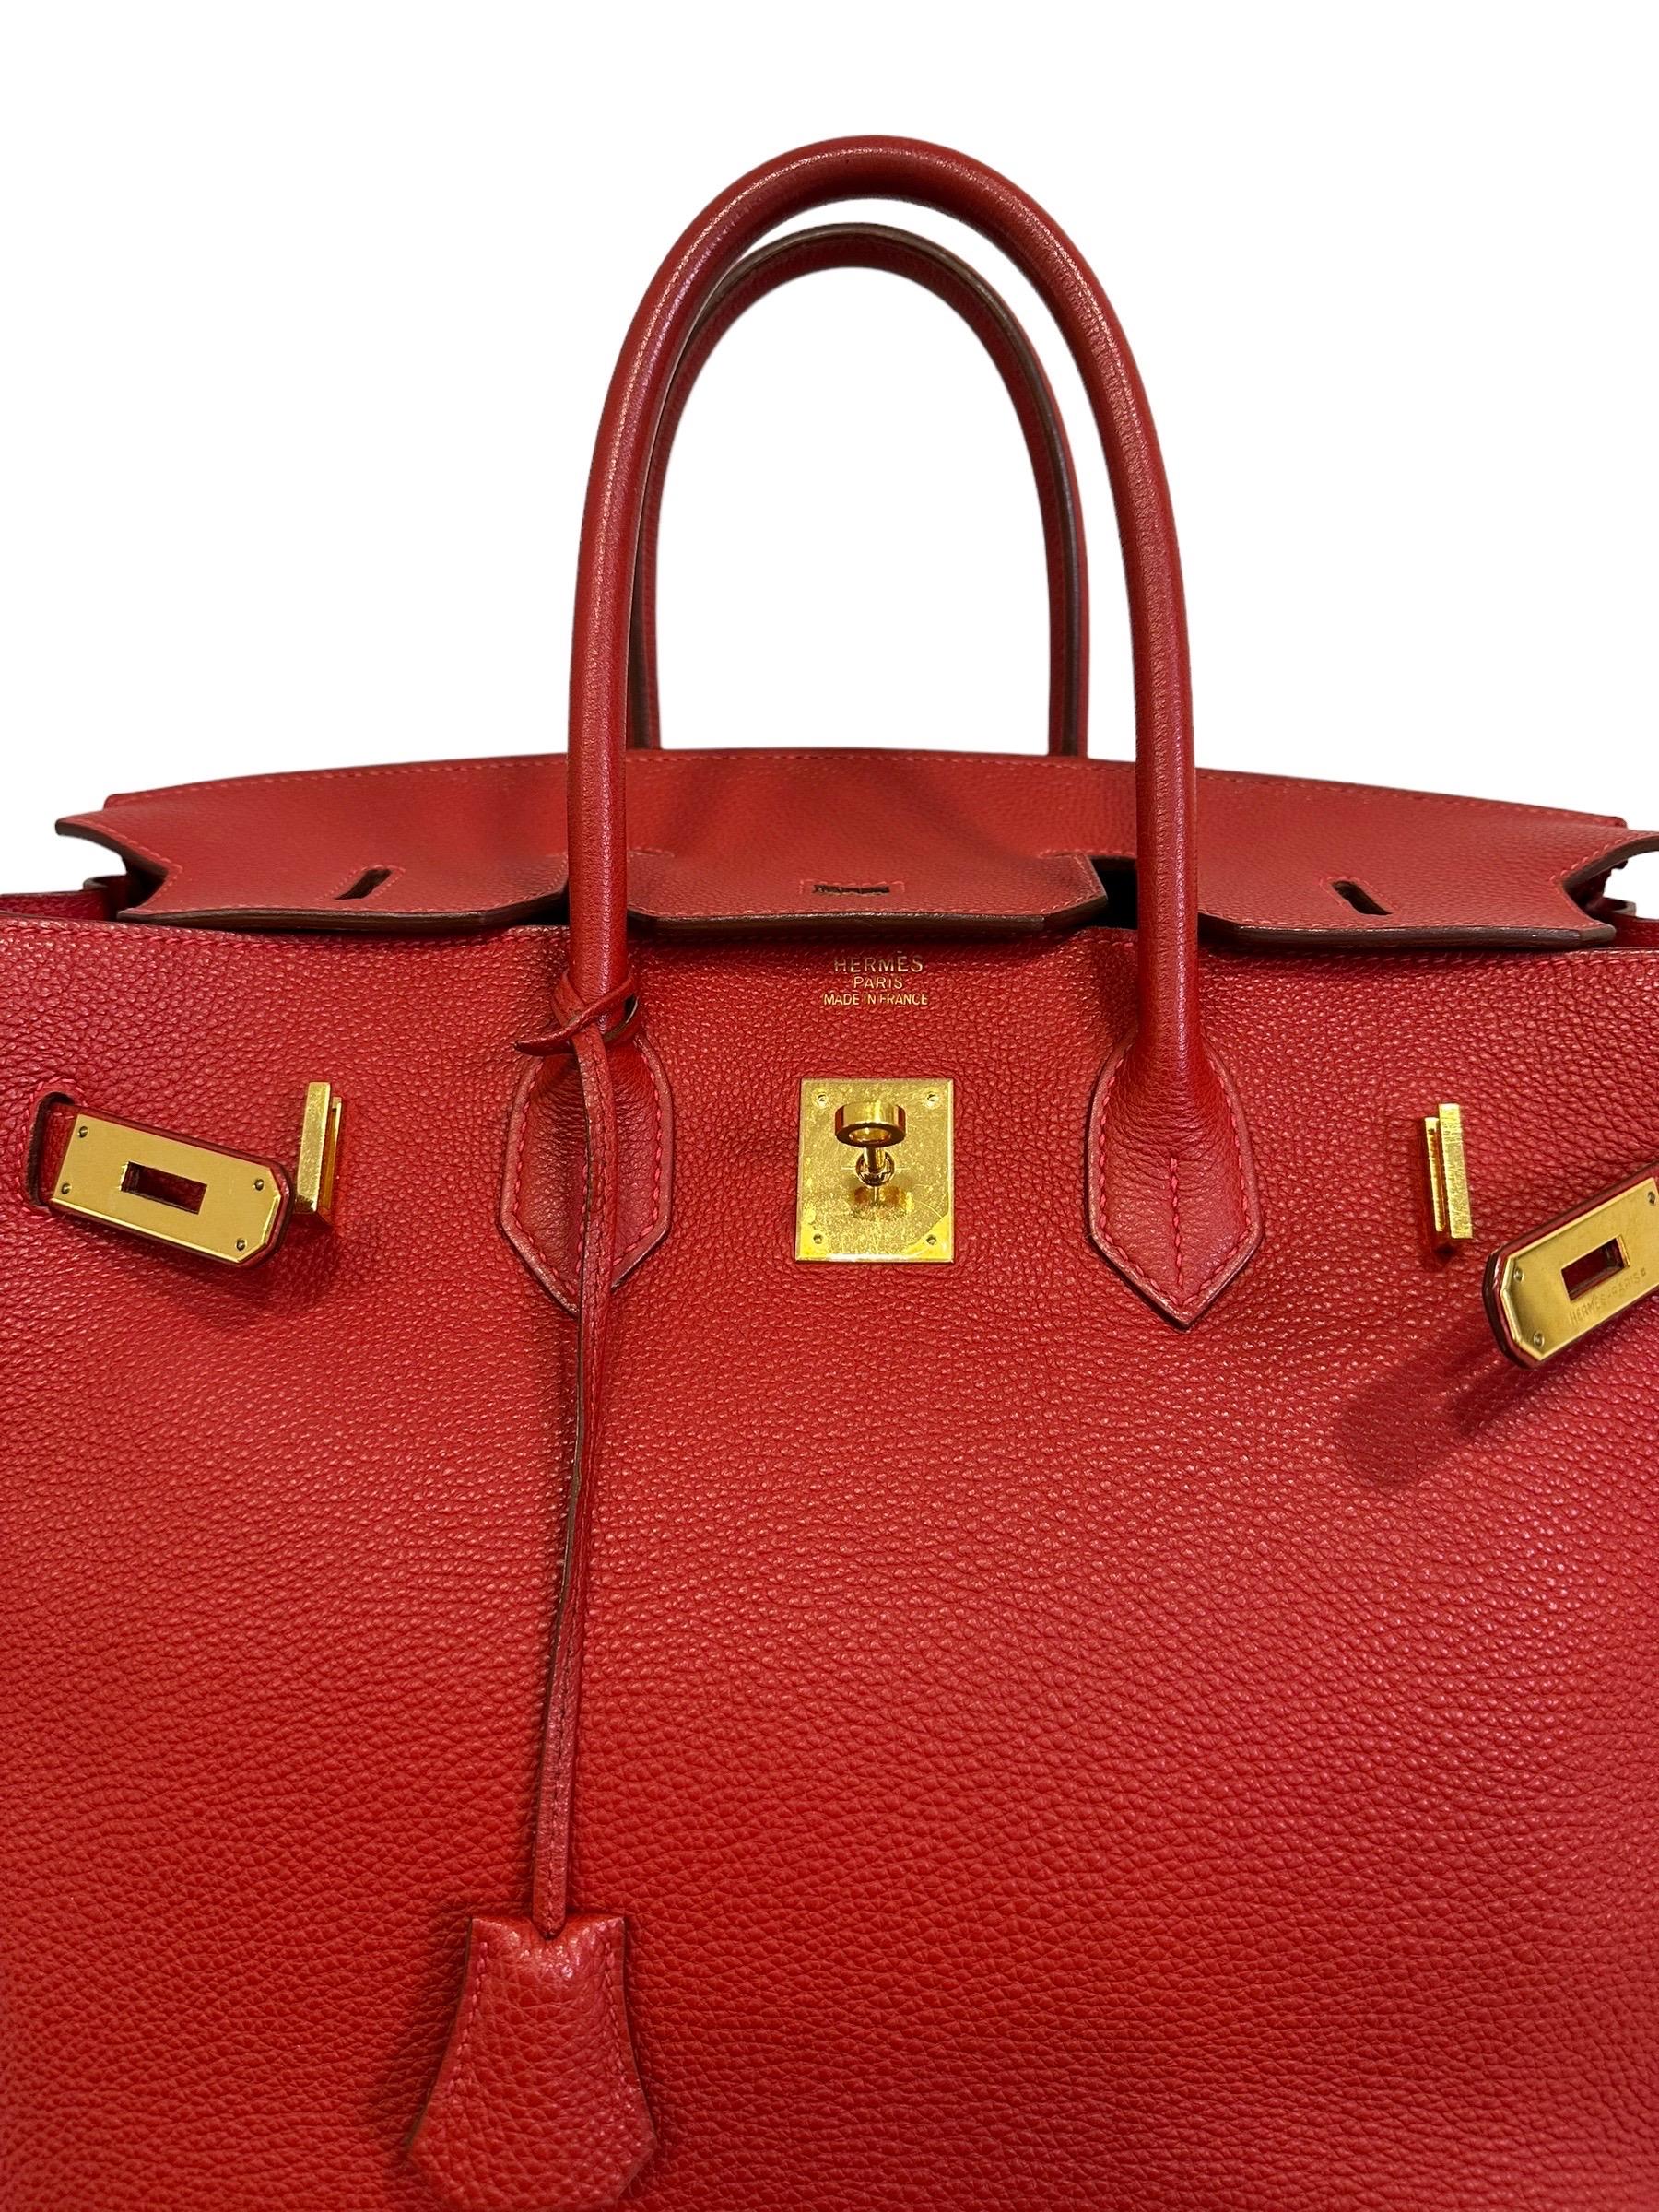 2004 Hermès Birkin 35 Fjord Leather Rouge Geranium Top Handle Bag  For Sale 3